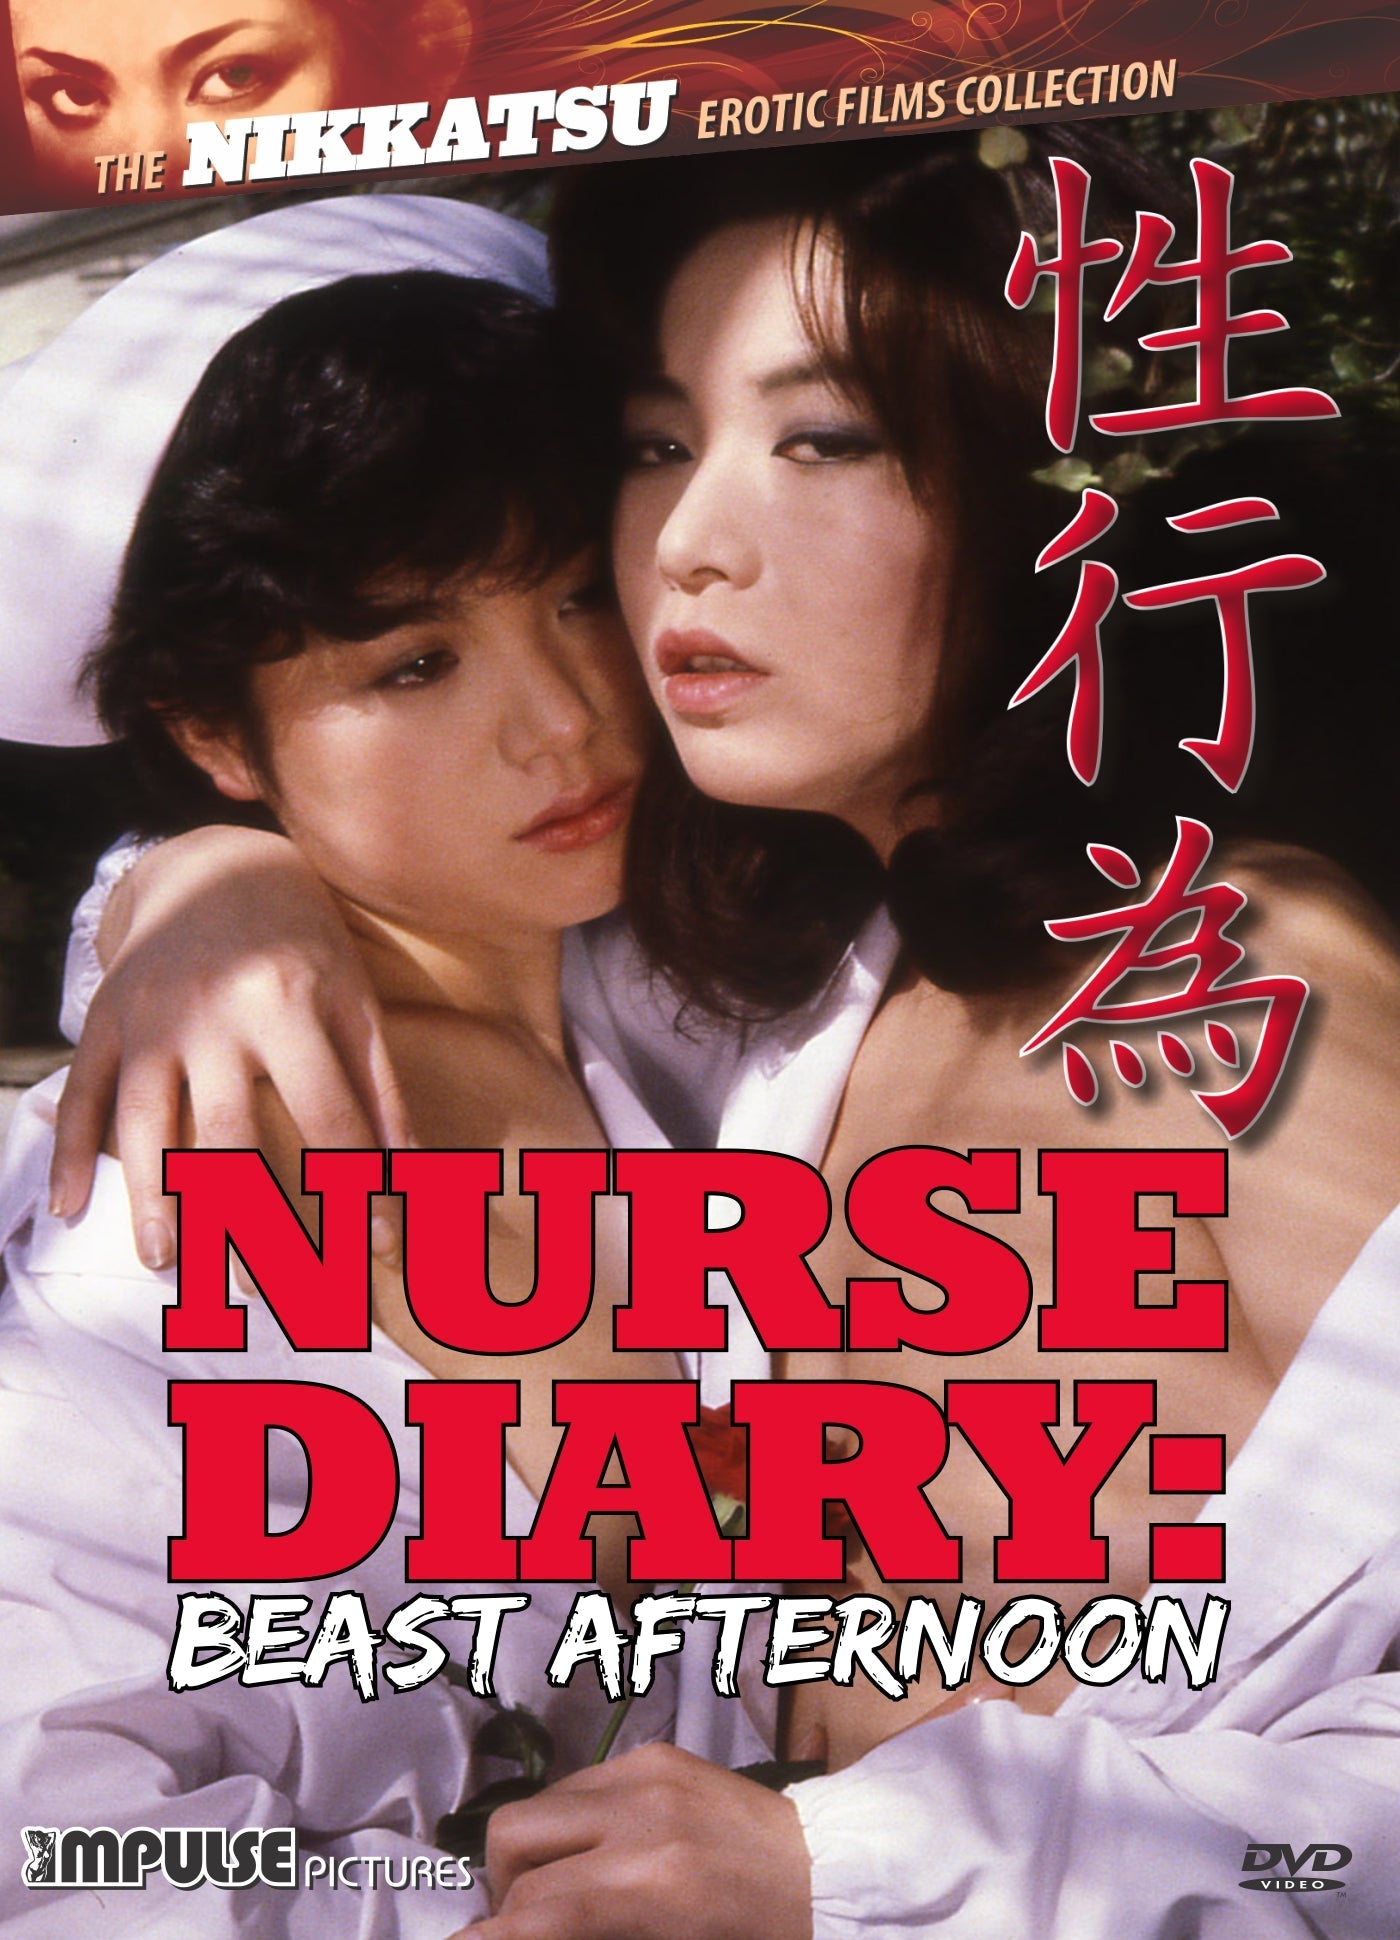 Nurse Diary: Beast Afternoon Dvd